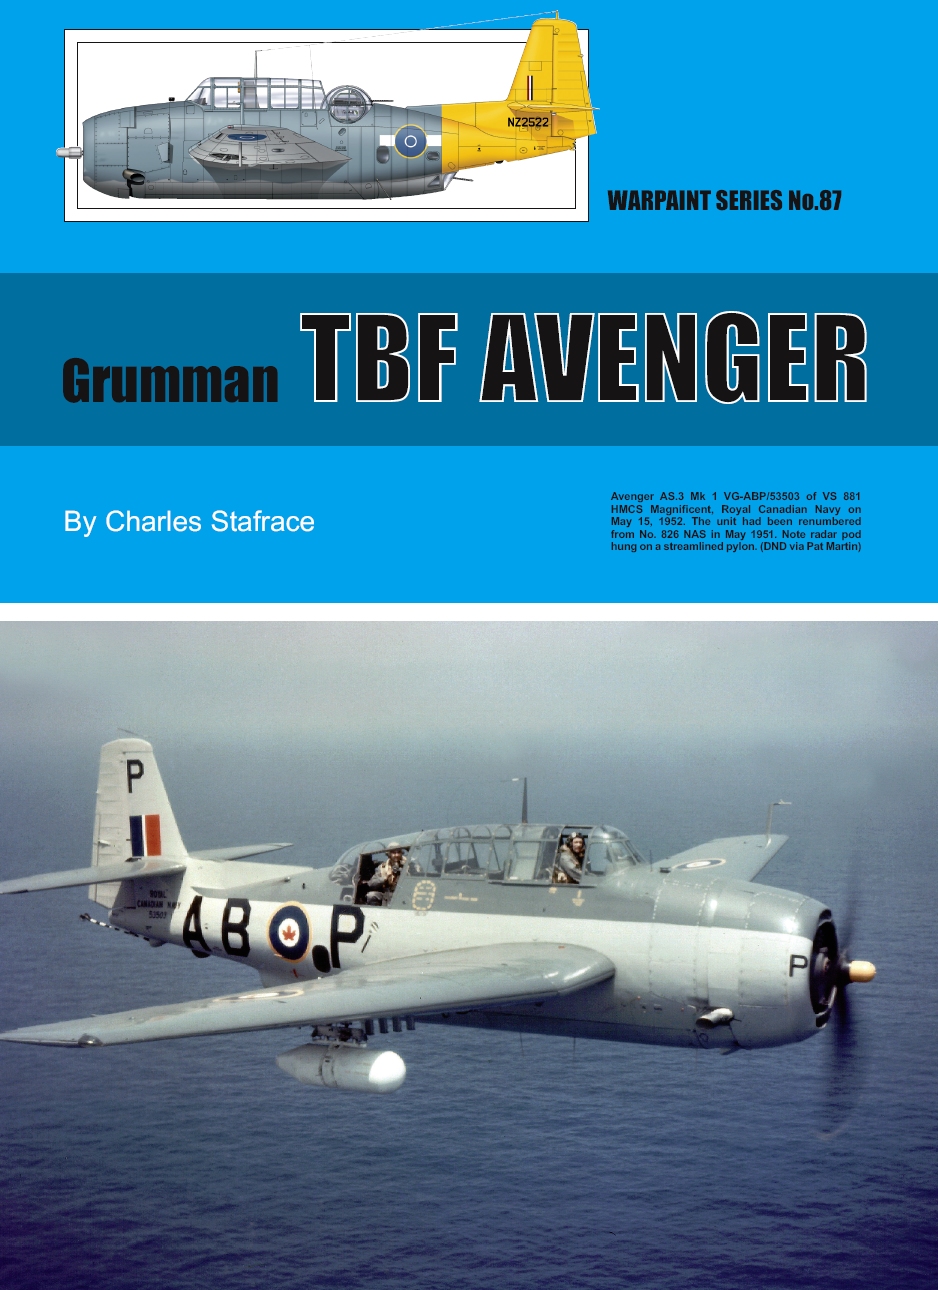 Guideline Publications Ltd No 87 Grumman TBF Avenger No. 87 in the Warpaint series 